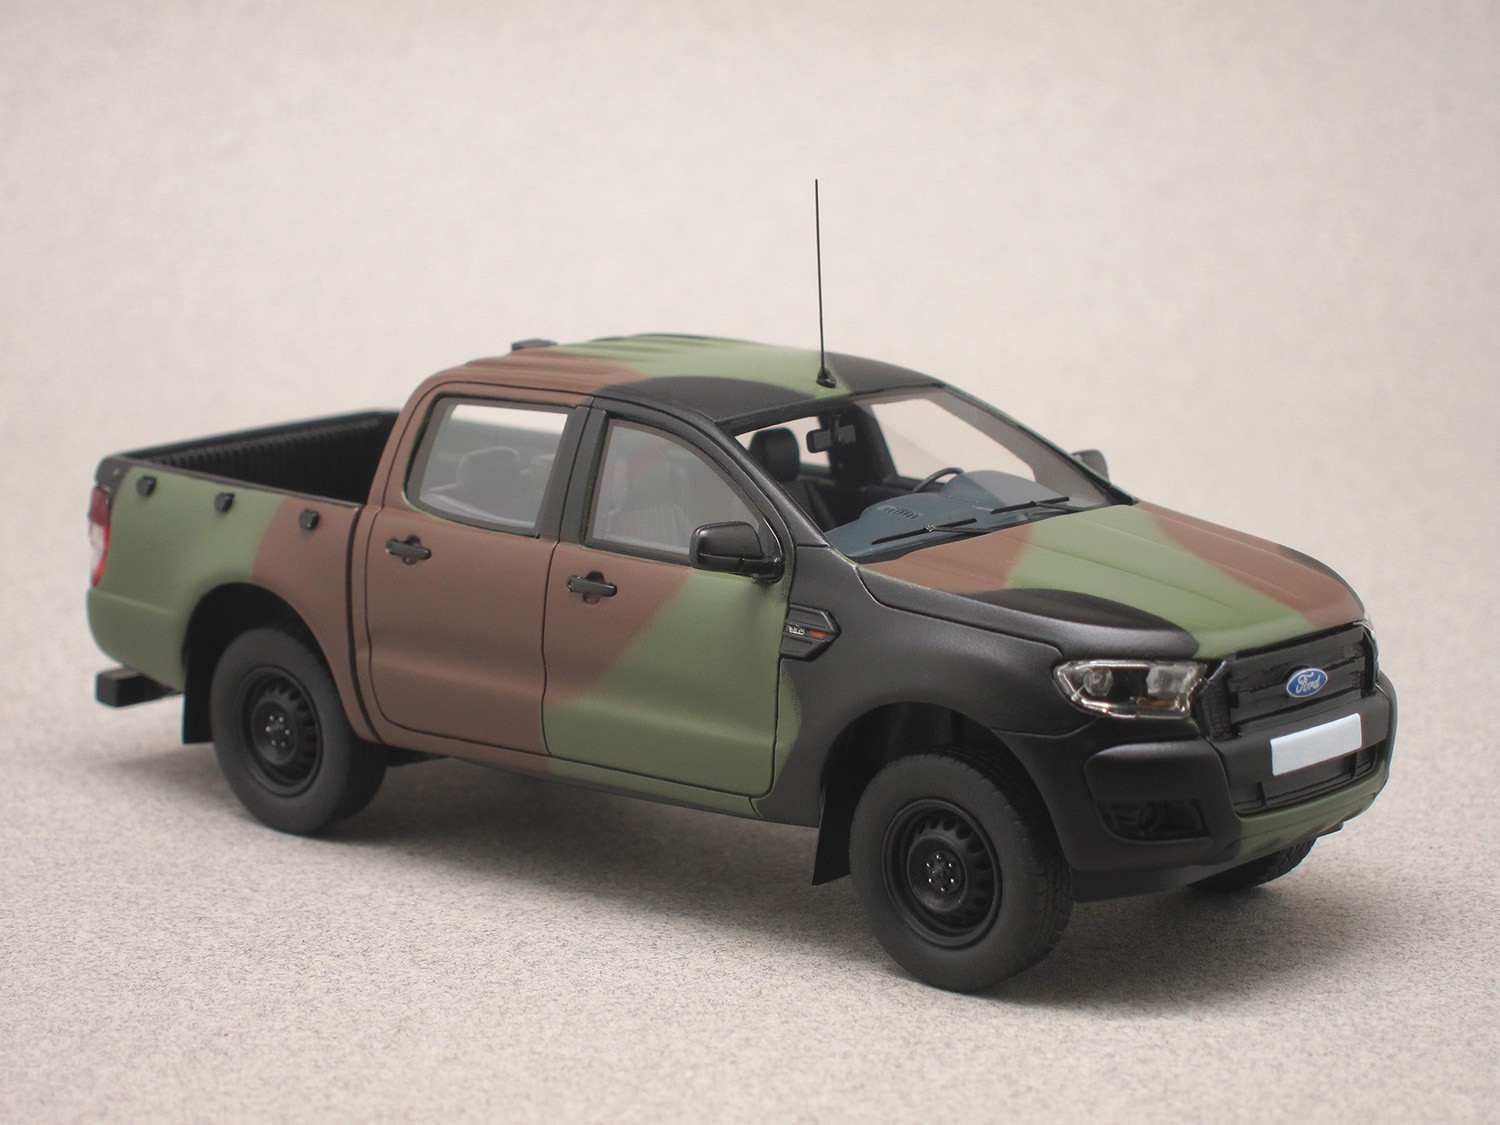 Ford Ranger 2016 militaire OTAN (Alarme) 1/43e